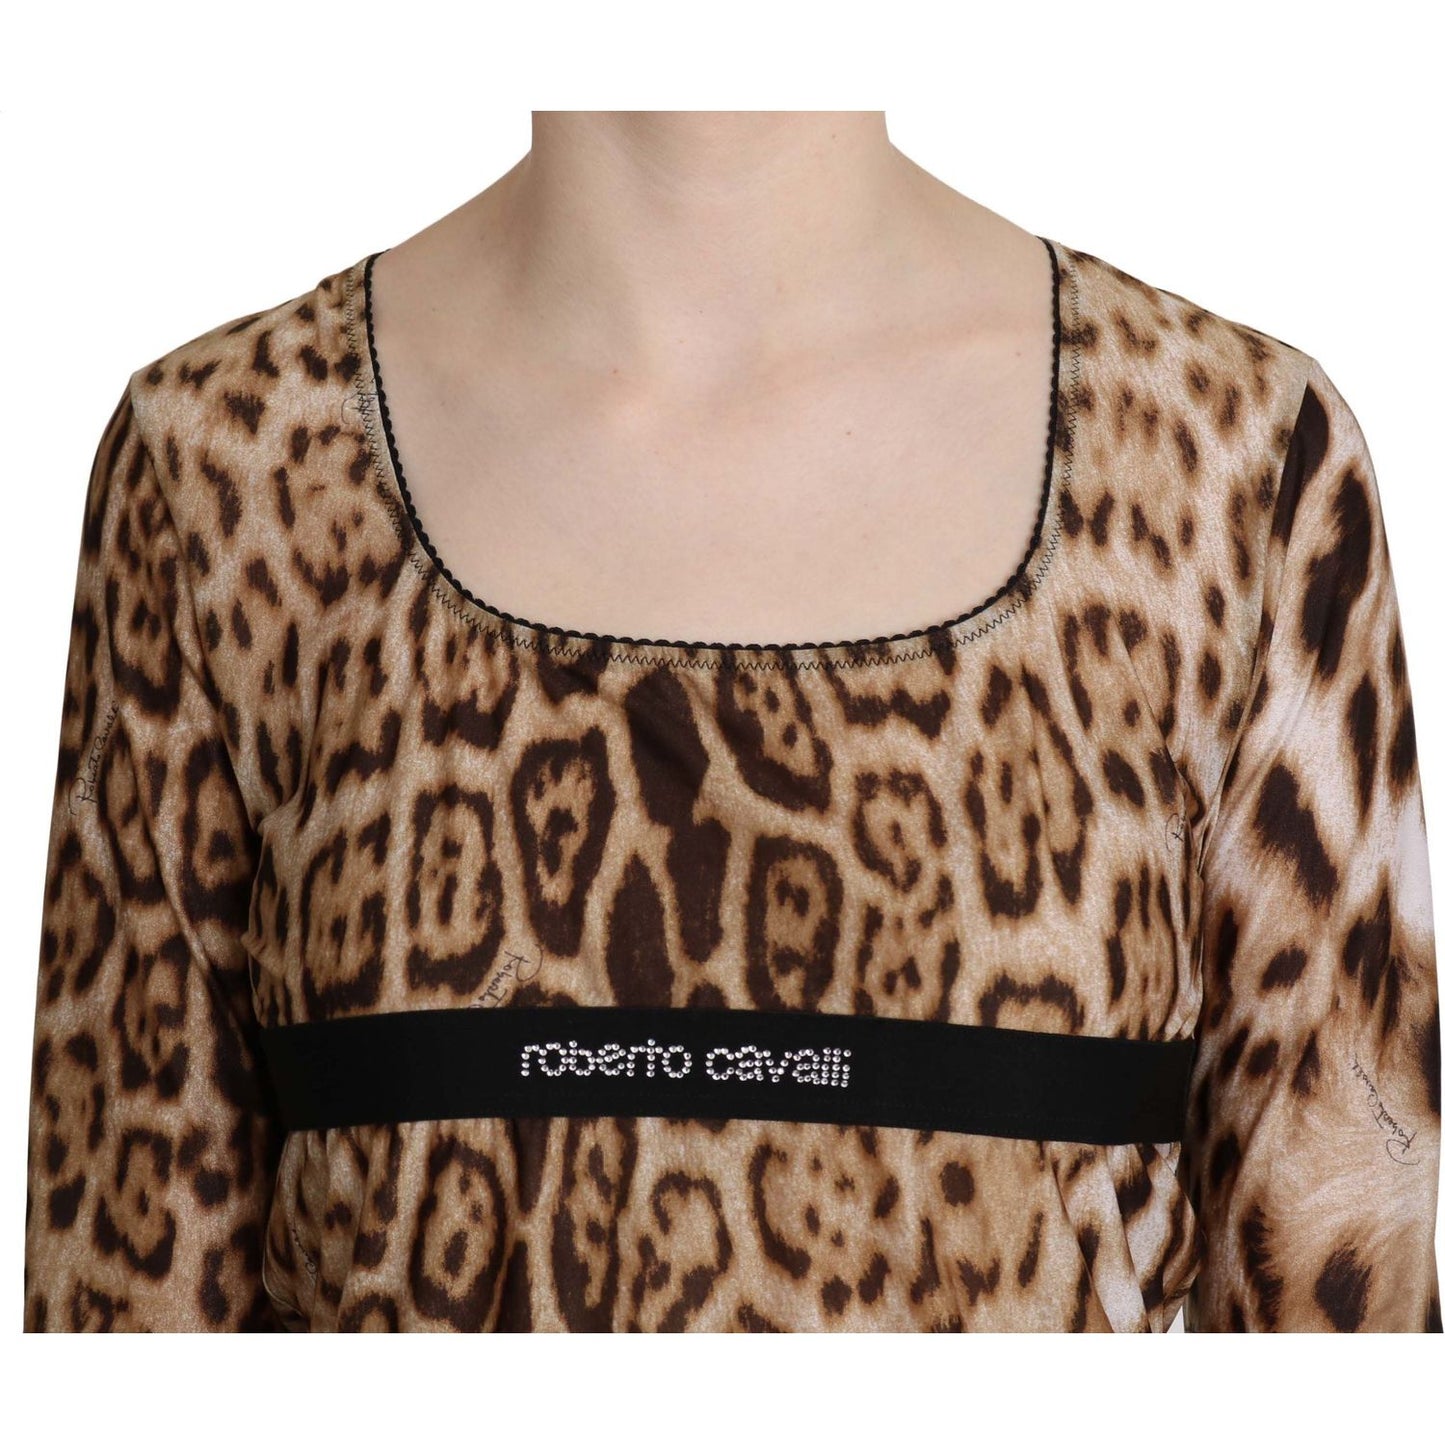 Roberto Cavalli Elegant Leopard Long Sleeve Top brown-round-neck-leopard-women-top-blouse IMG_0395-2-scaled-ee2dc340-d99.jpg